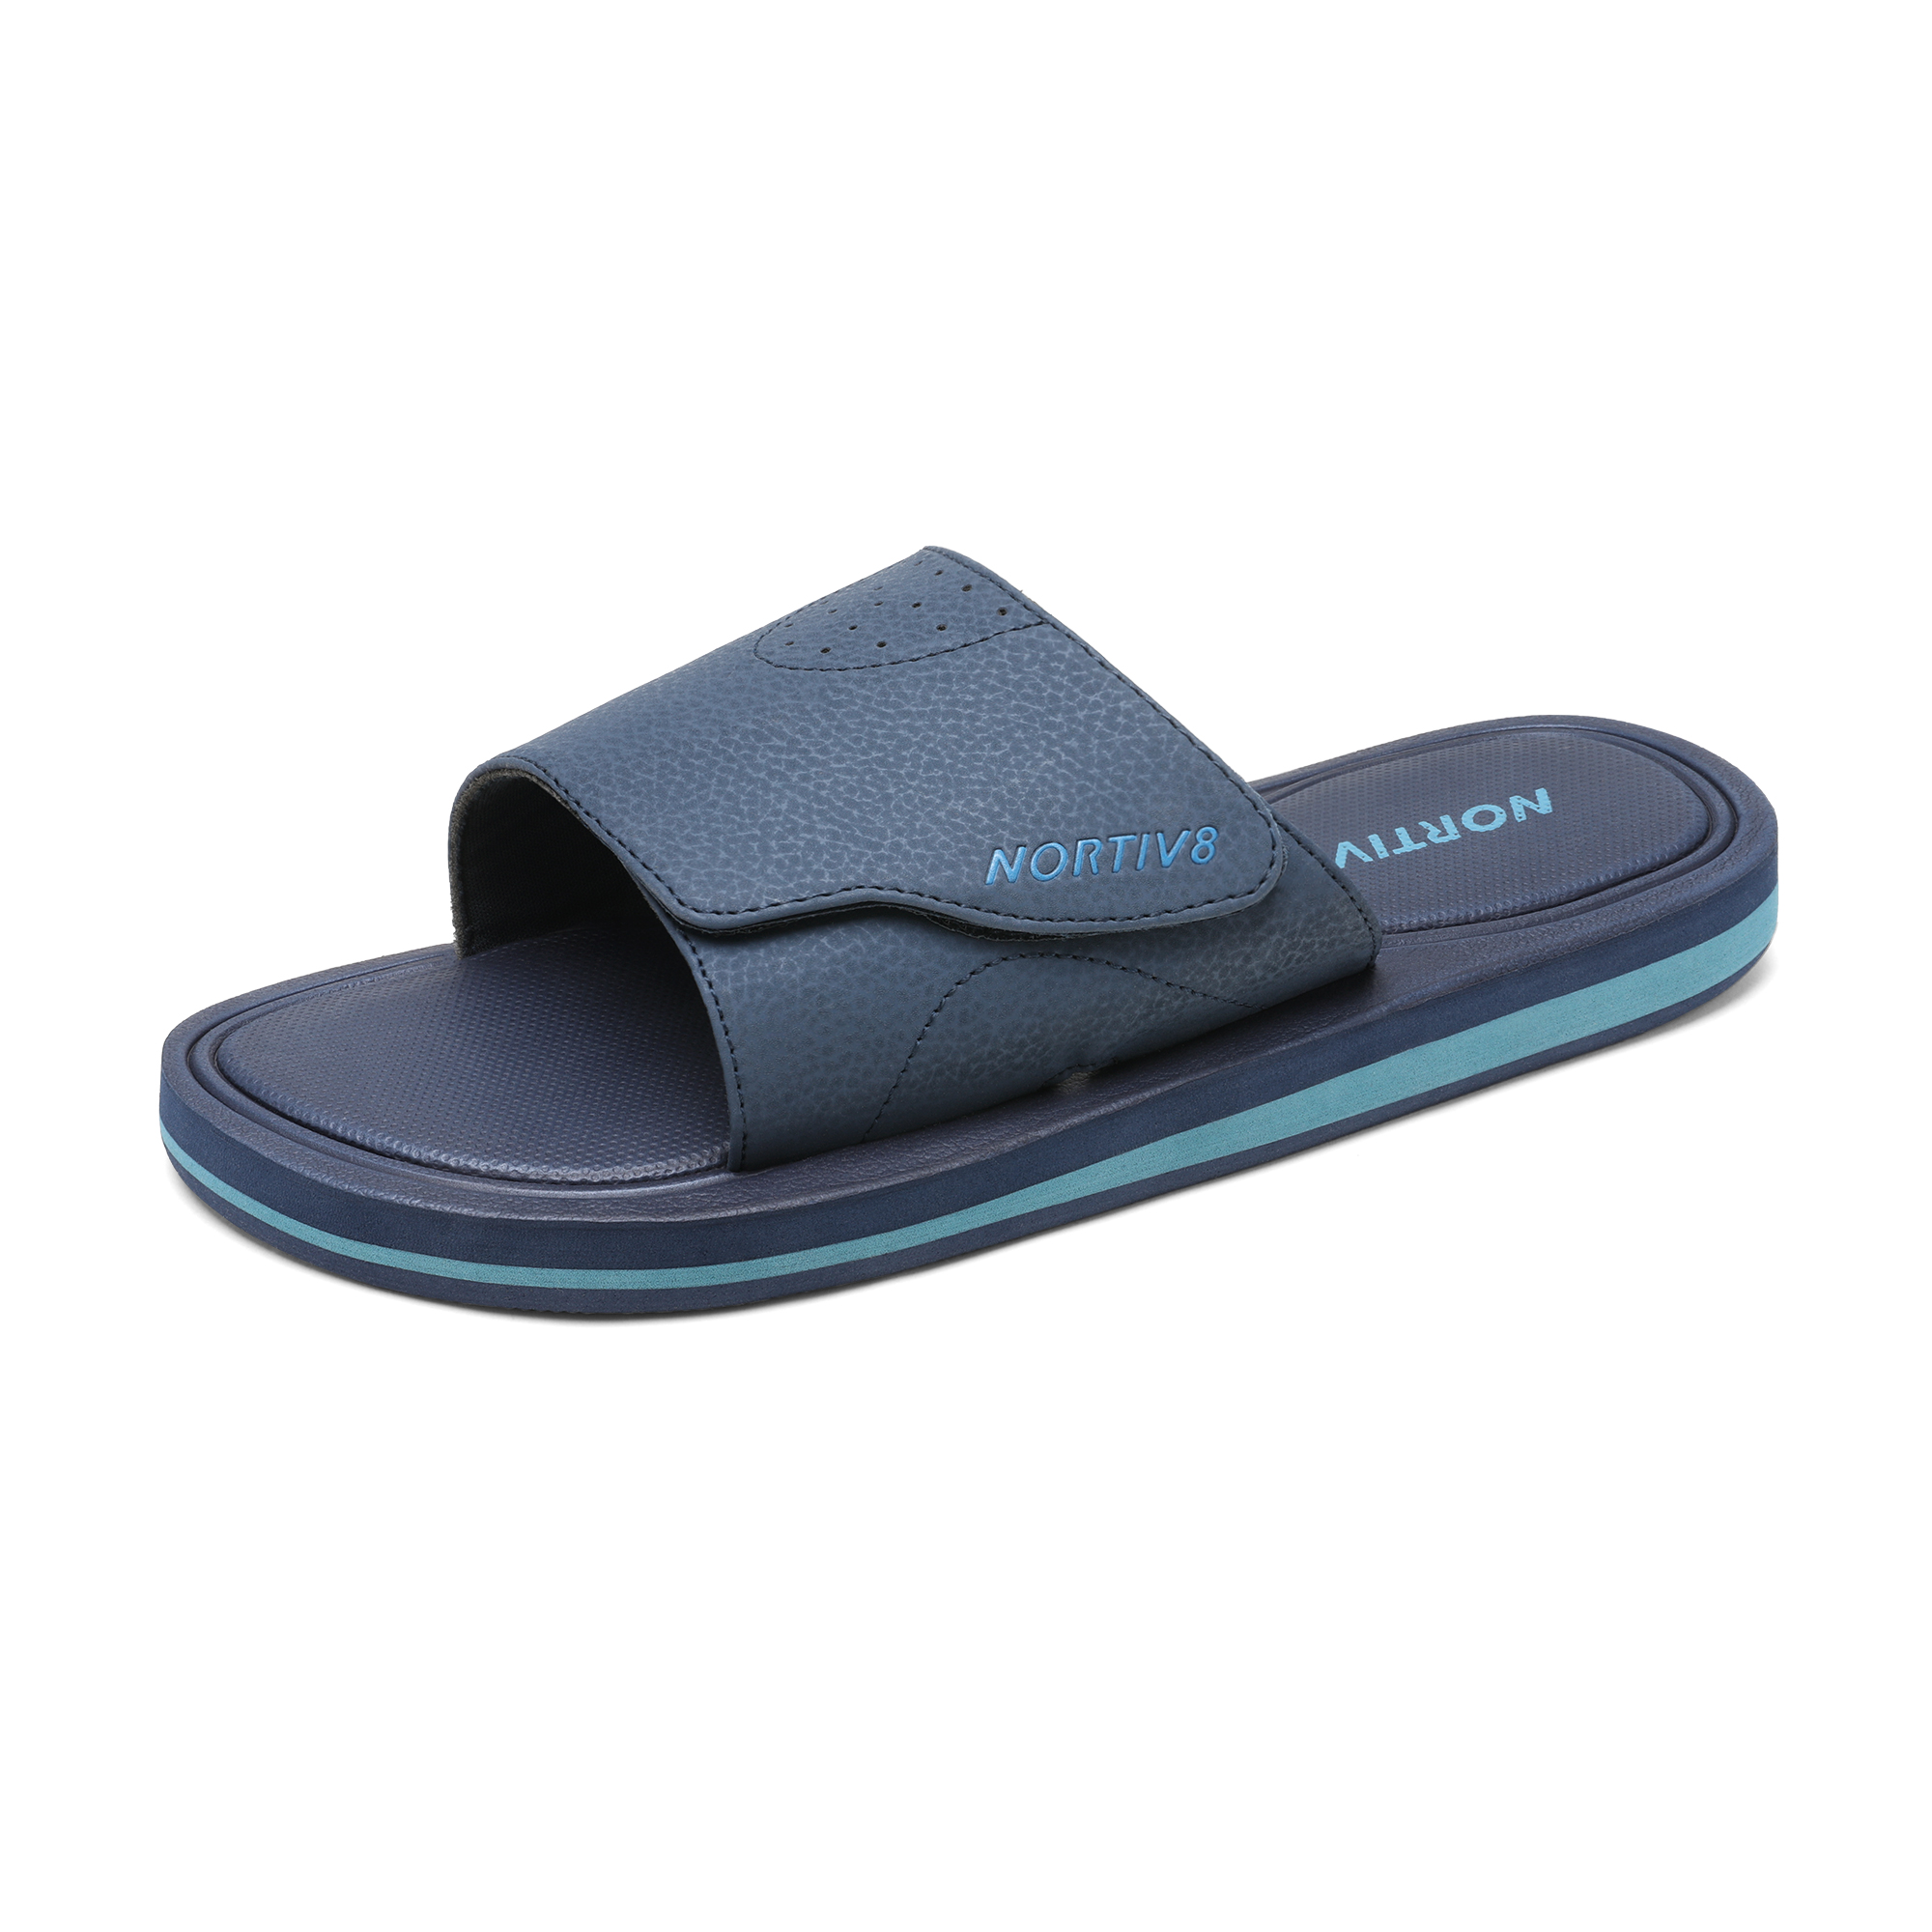 Nortiv8 Men's Memory Foam Adjustable Slide Sandals Comfort Lightweight Summer Beach Sandals Shoes FUSION NAVY Size 13 - image 1 of 5